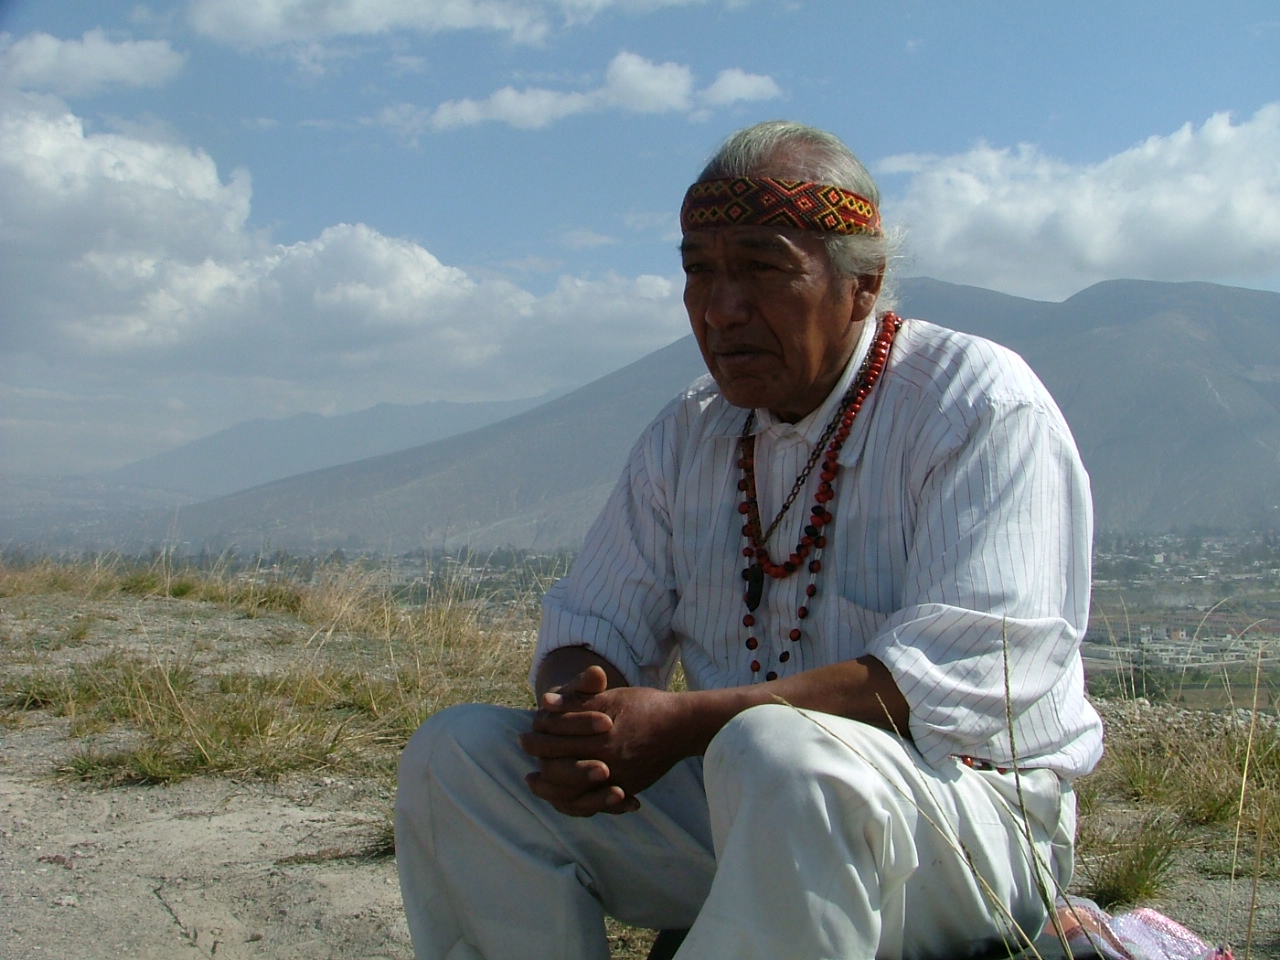 shaman south ecuador america carlos don experience travel healings shamans prweb 2006